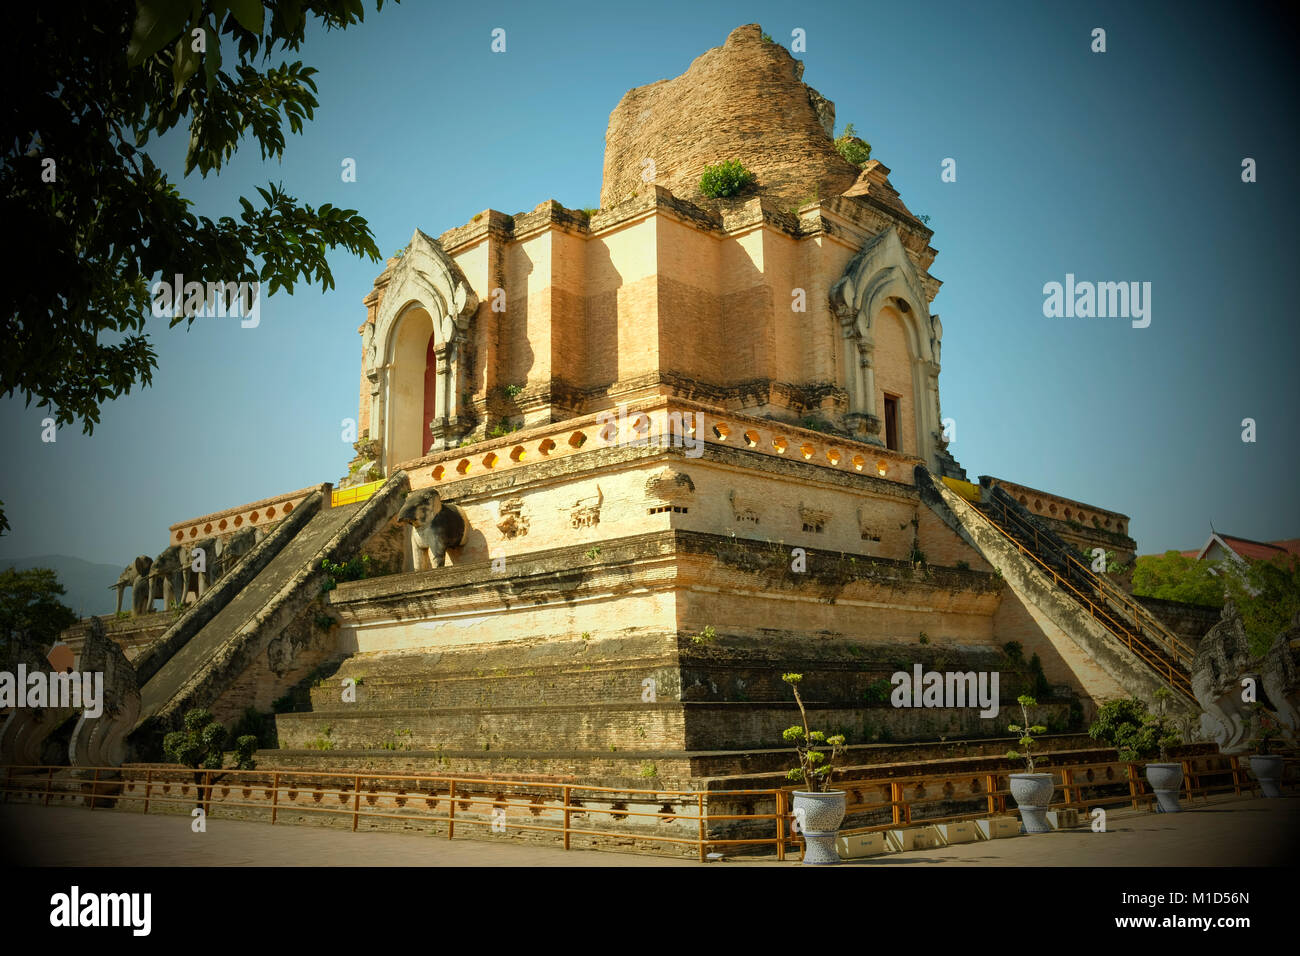 The ancient stupa at Wat Chedi Luang in Chiang Mai, Thailand. 24-Jan-2018 Stock Photo